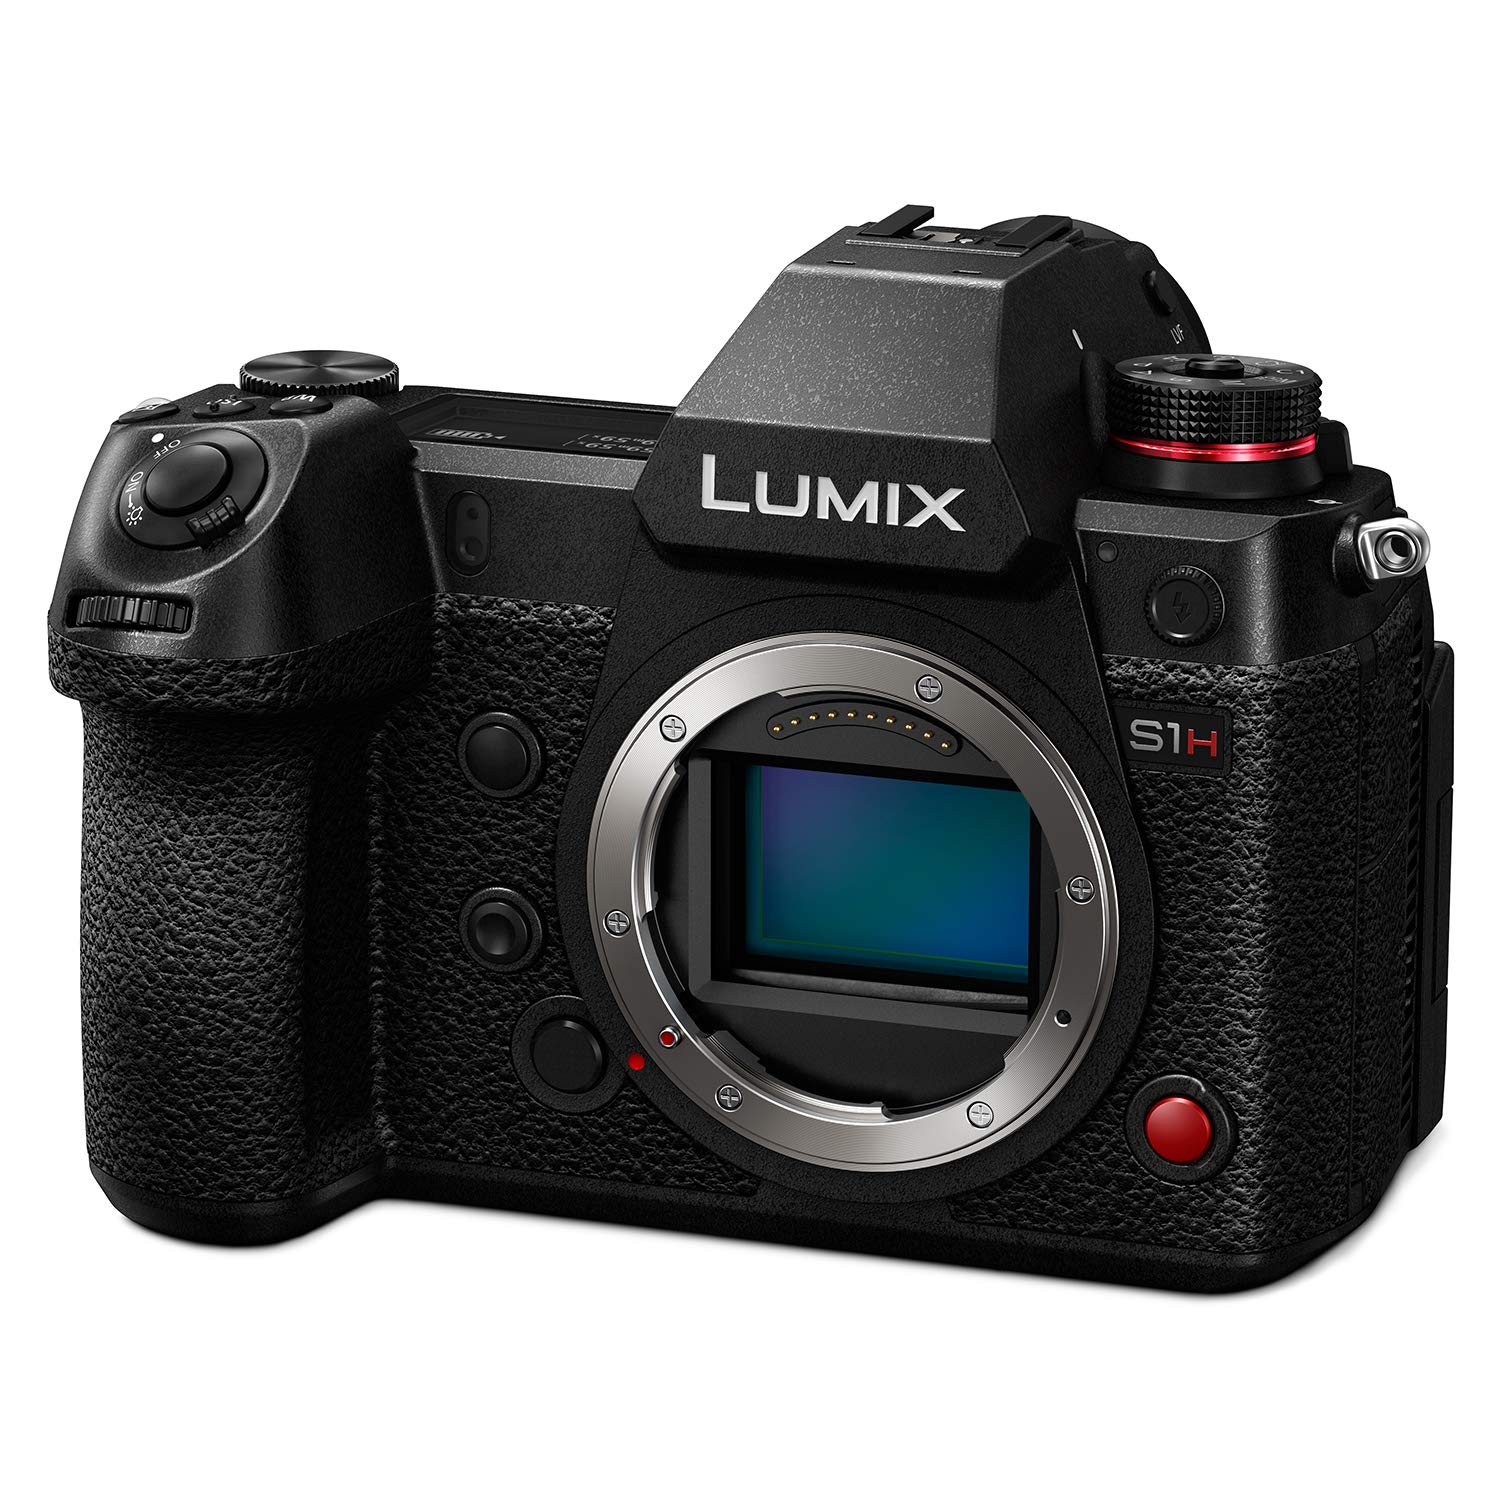 Panasonic पैनासोनिक LUMIX S1H मिररलेस डिजिटल कैमरा